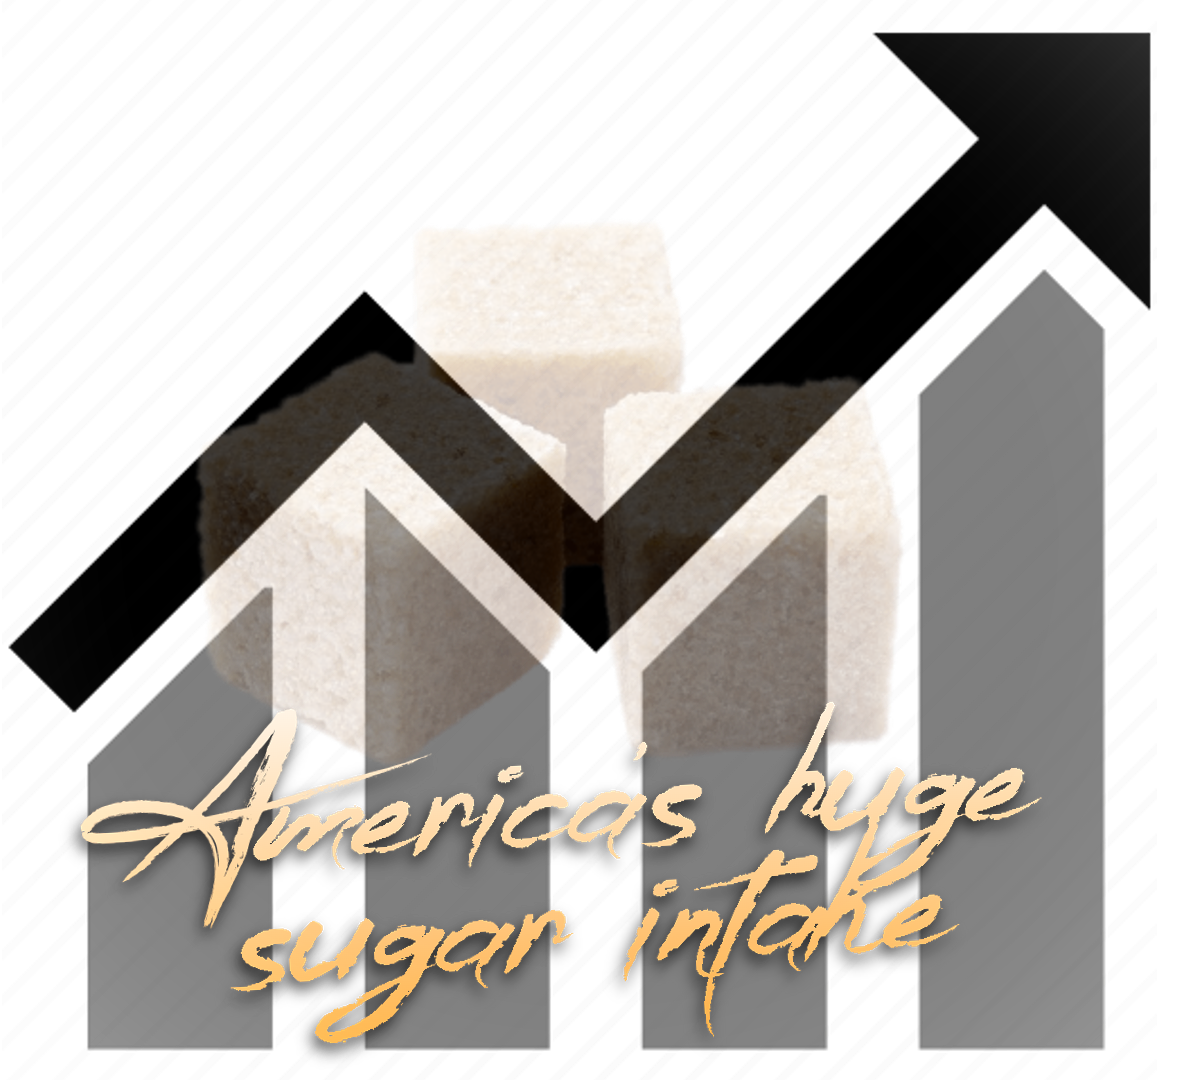 America’s Sugar Intake